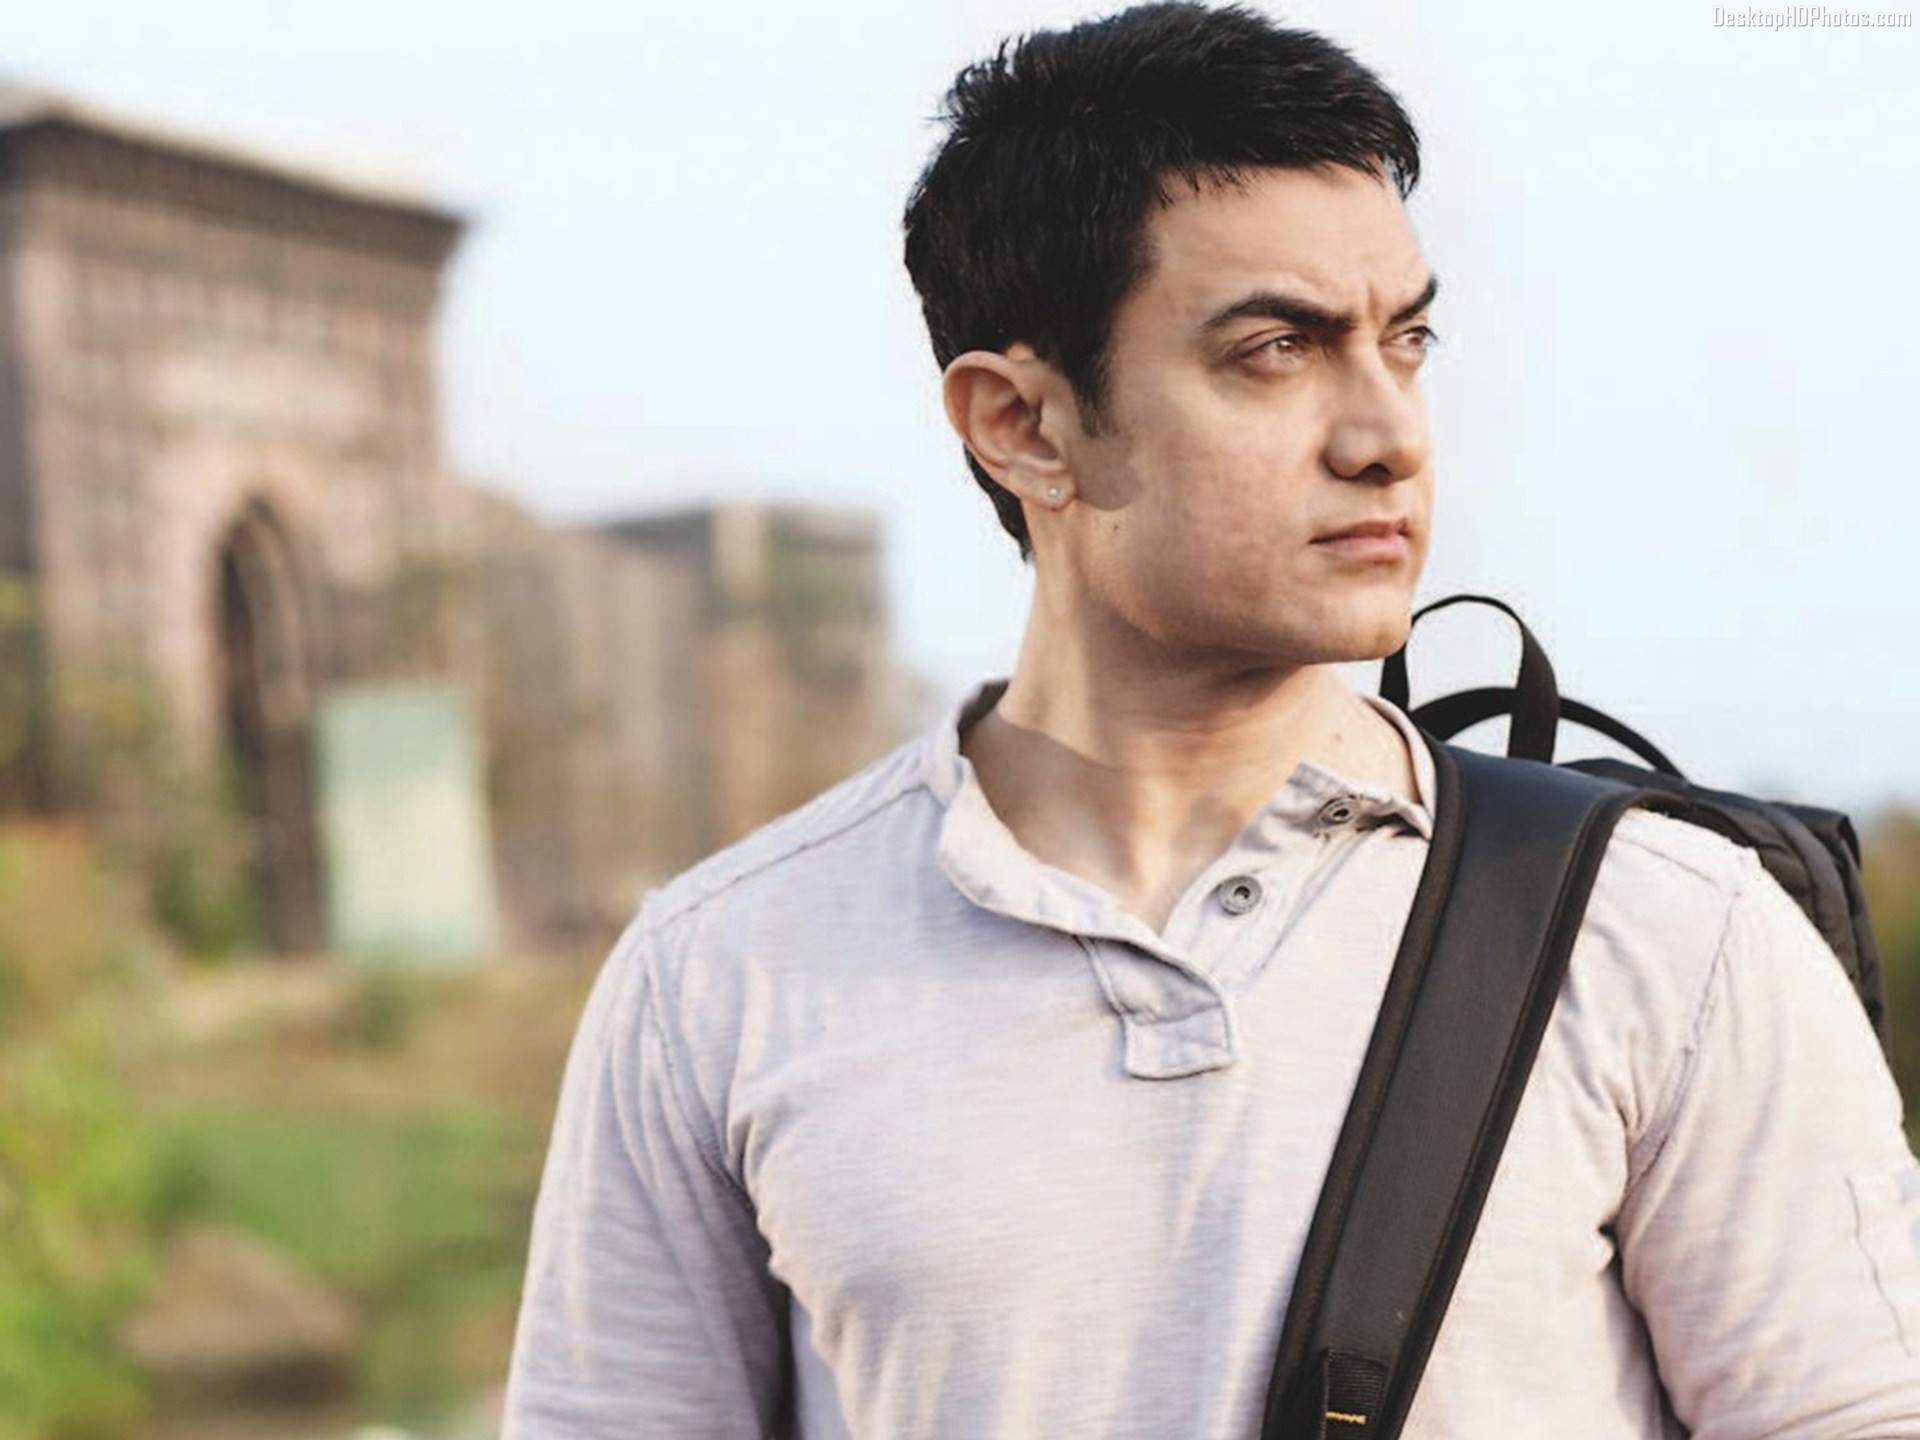 Aamir Khan Wallpaper HD Background Image Pics Photos